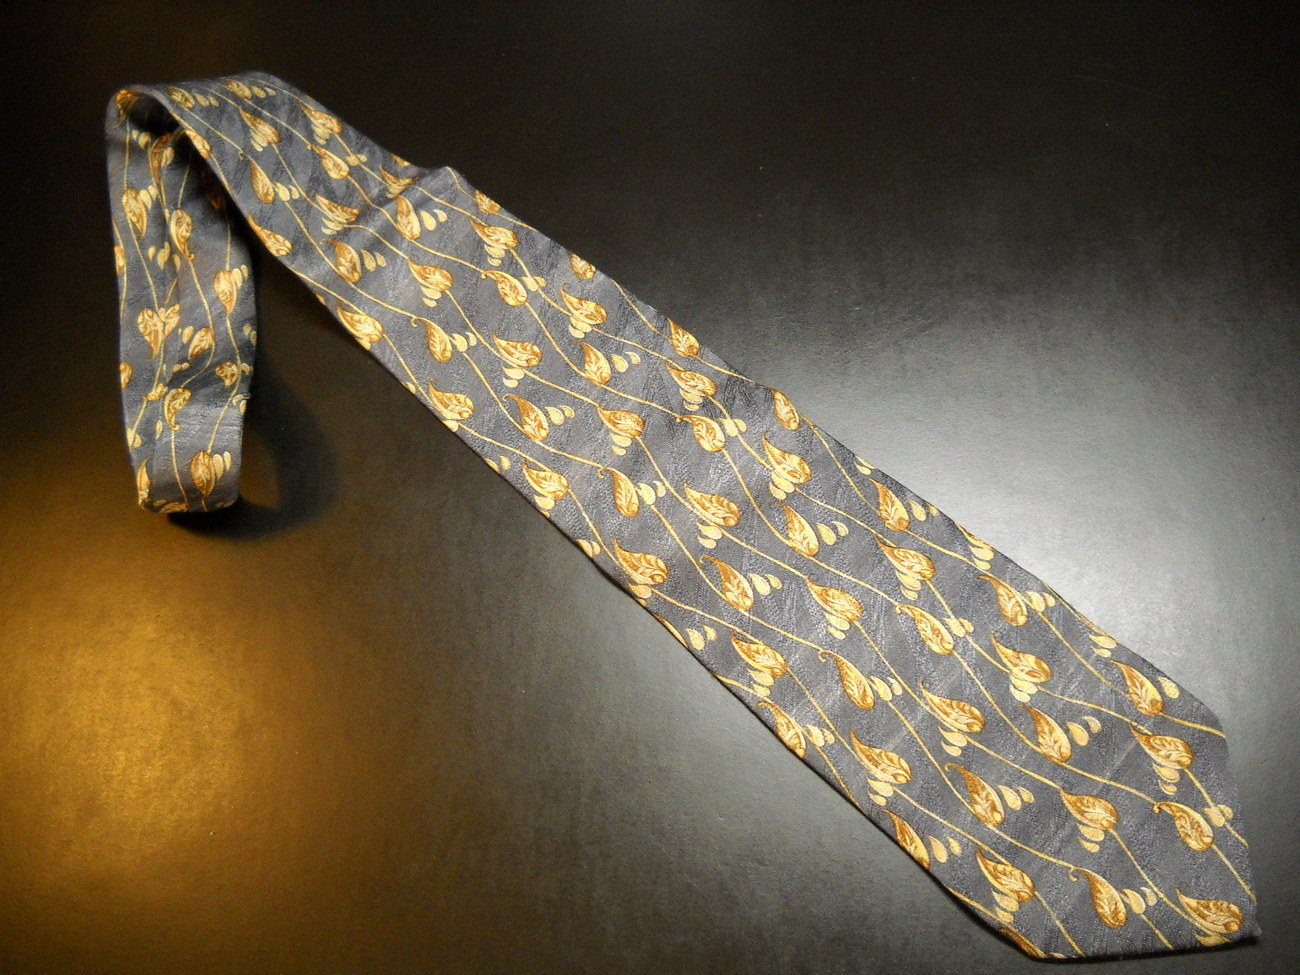 Primary image for Joseph Abboud Neck Tie Design No 71212 Greys Italian Leaves Vines Golden Browns